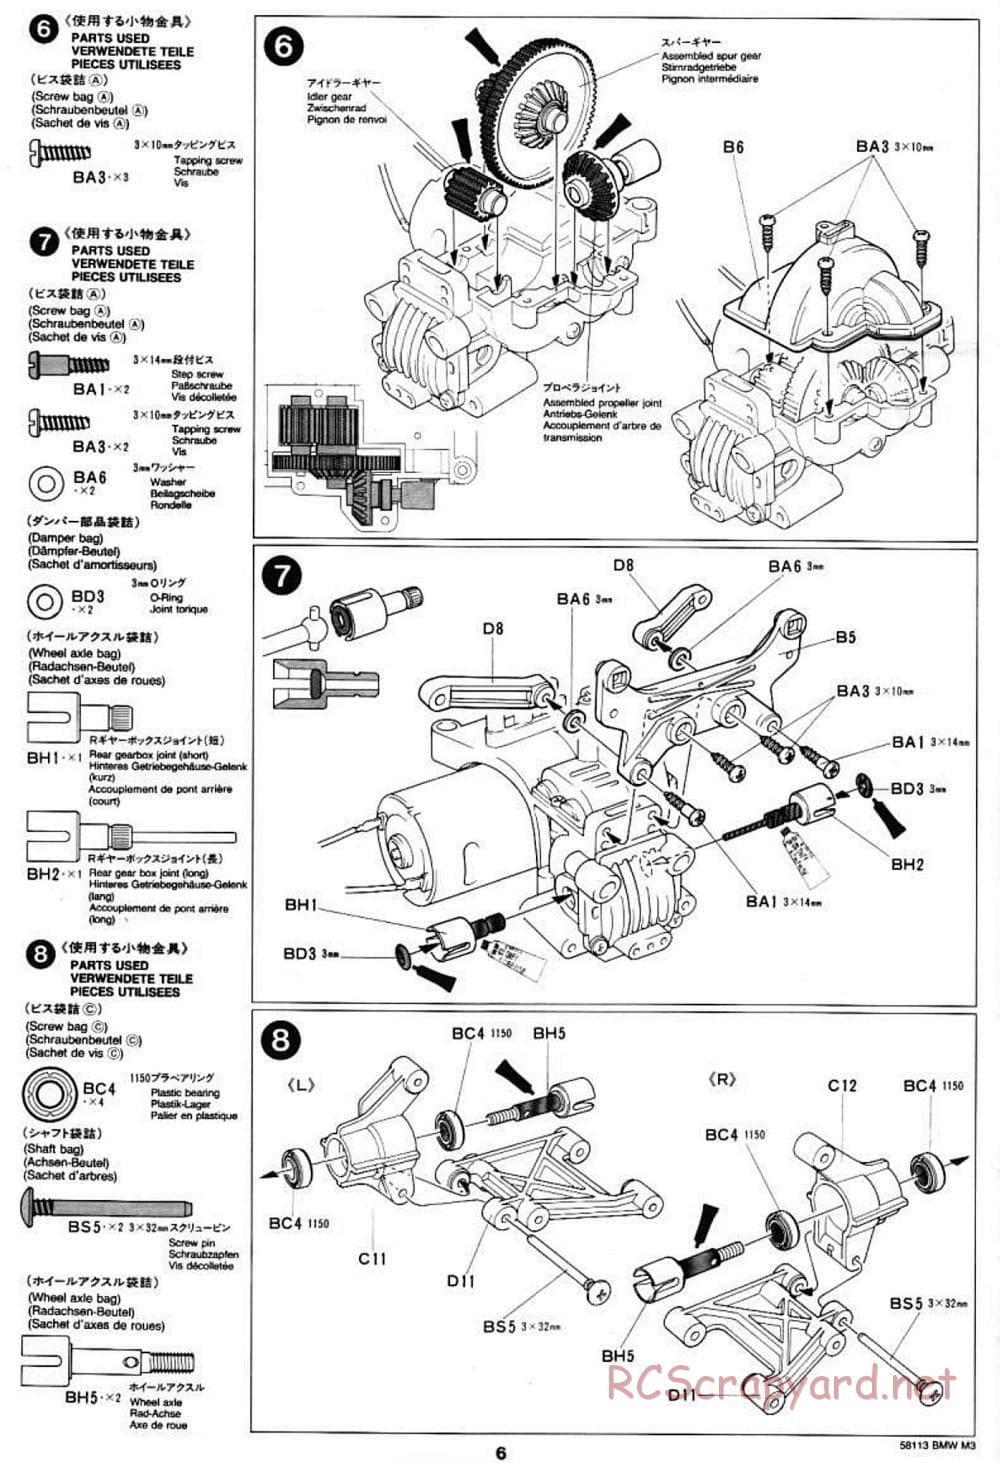 Tamiya - Schnitzer BMW M3 Sport Evo - TA-01 Chassis - Manual - Page 6